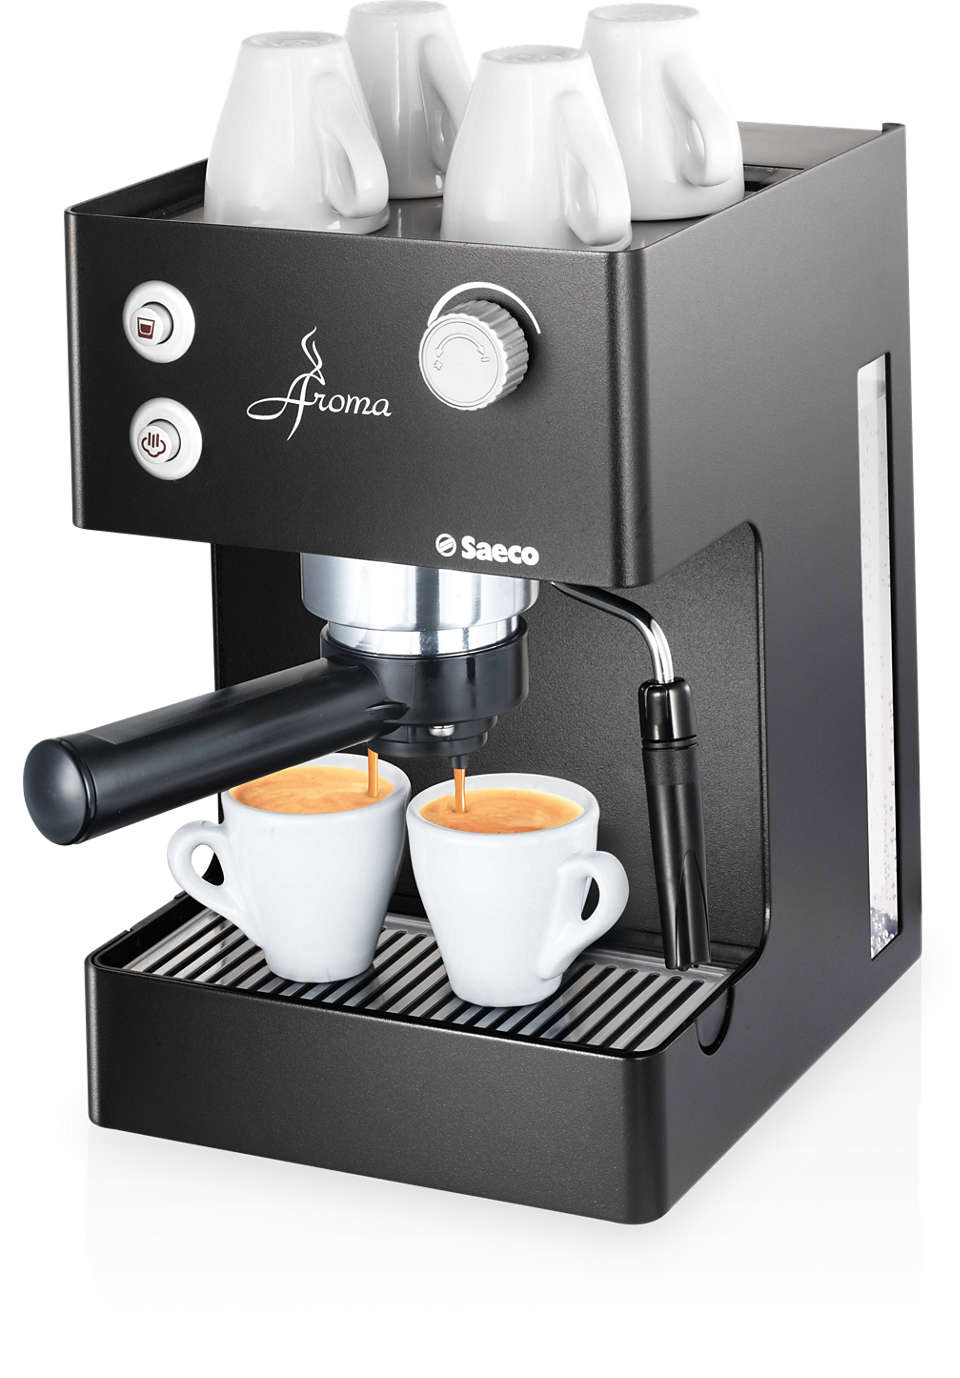 Taste the full aroma of your Espresso